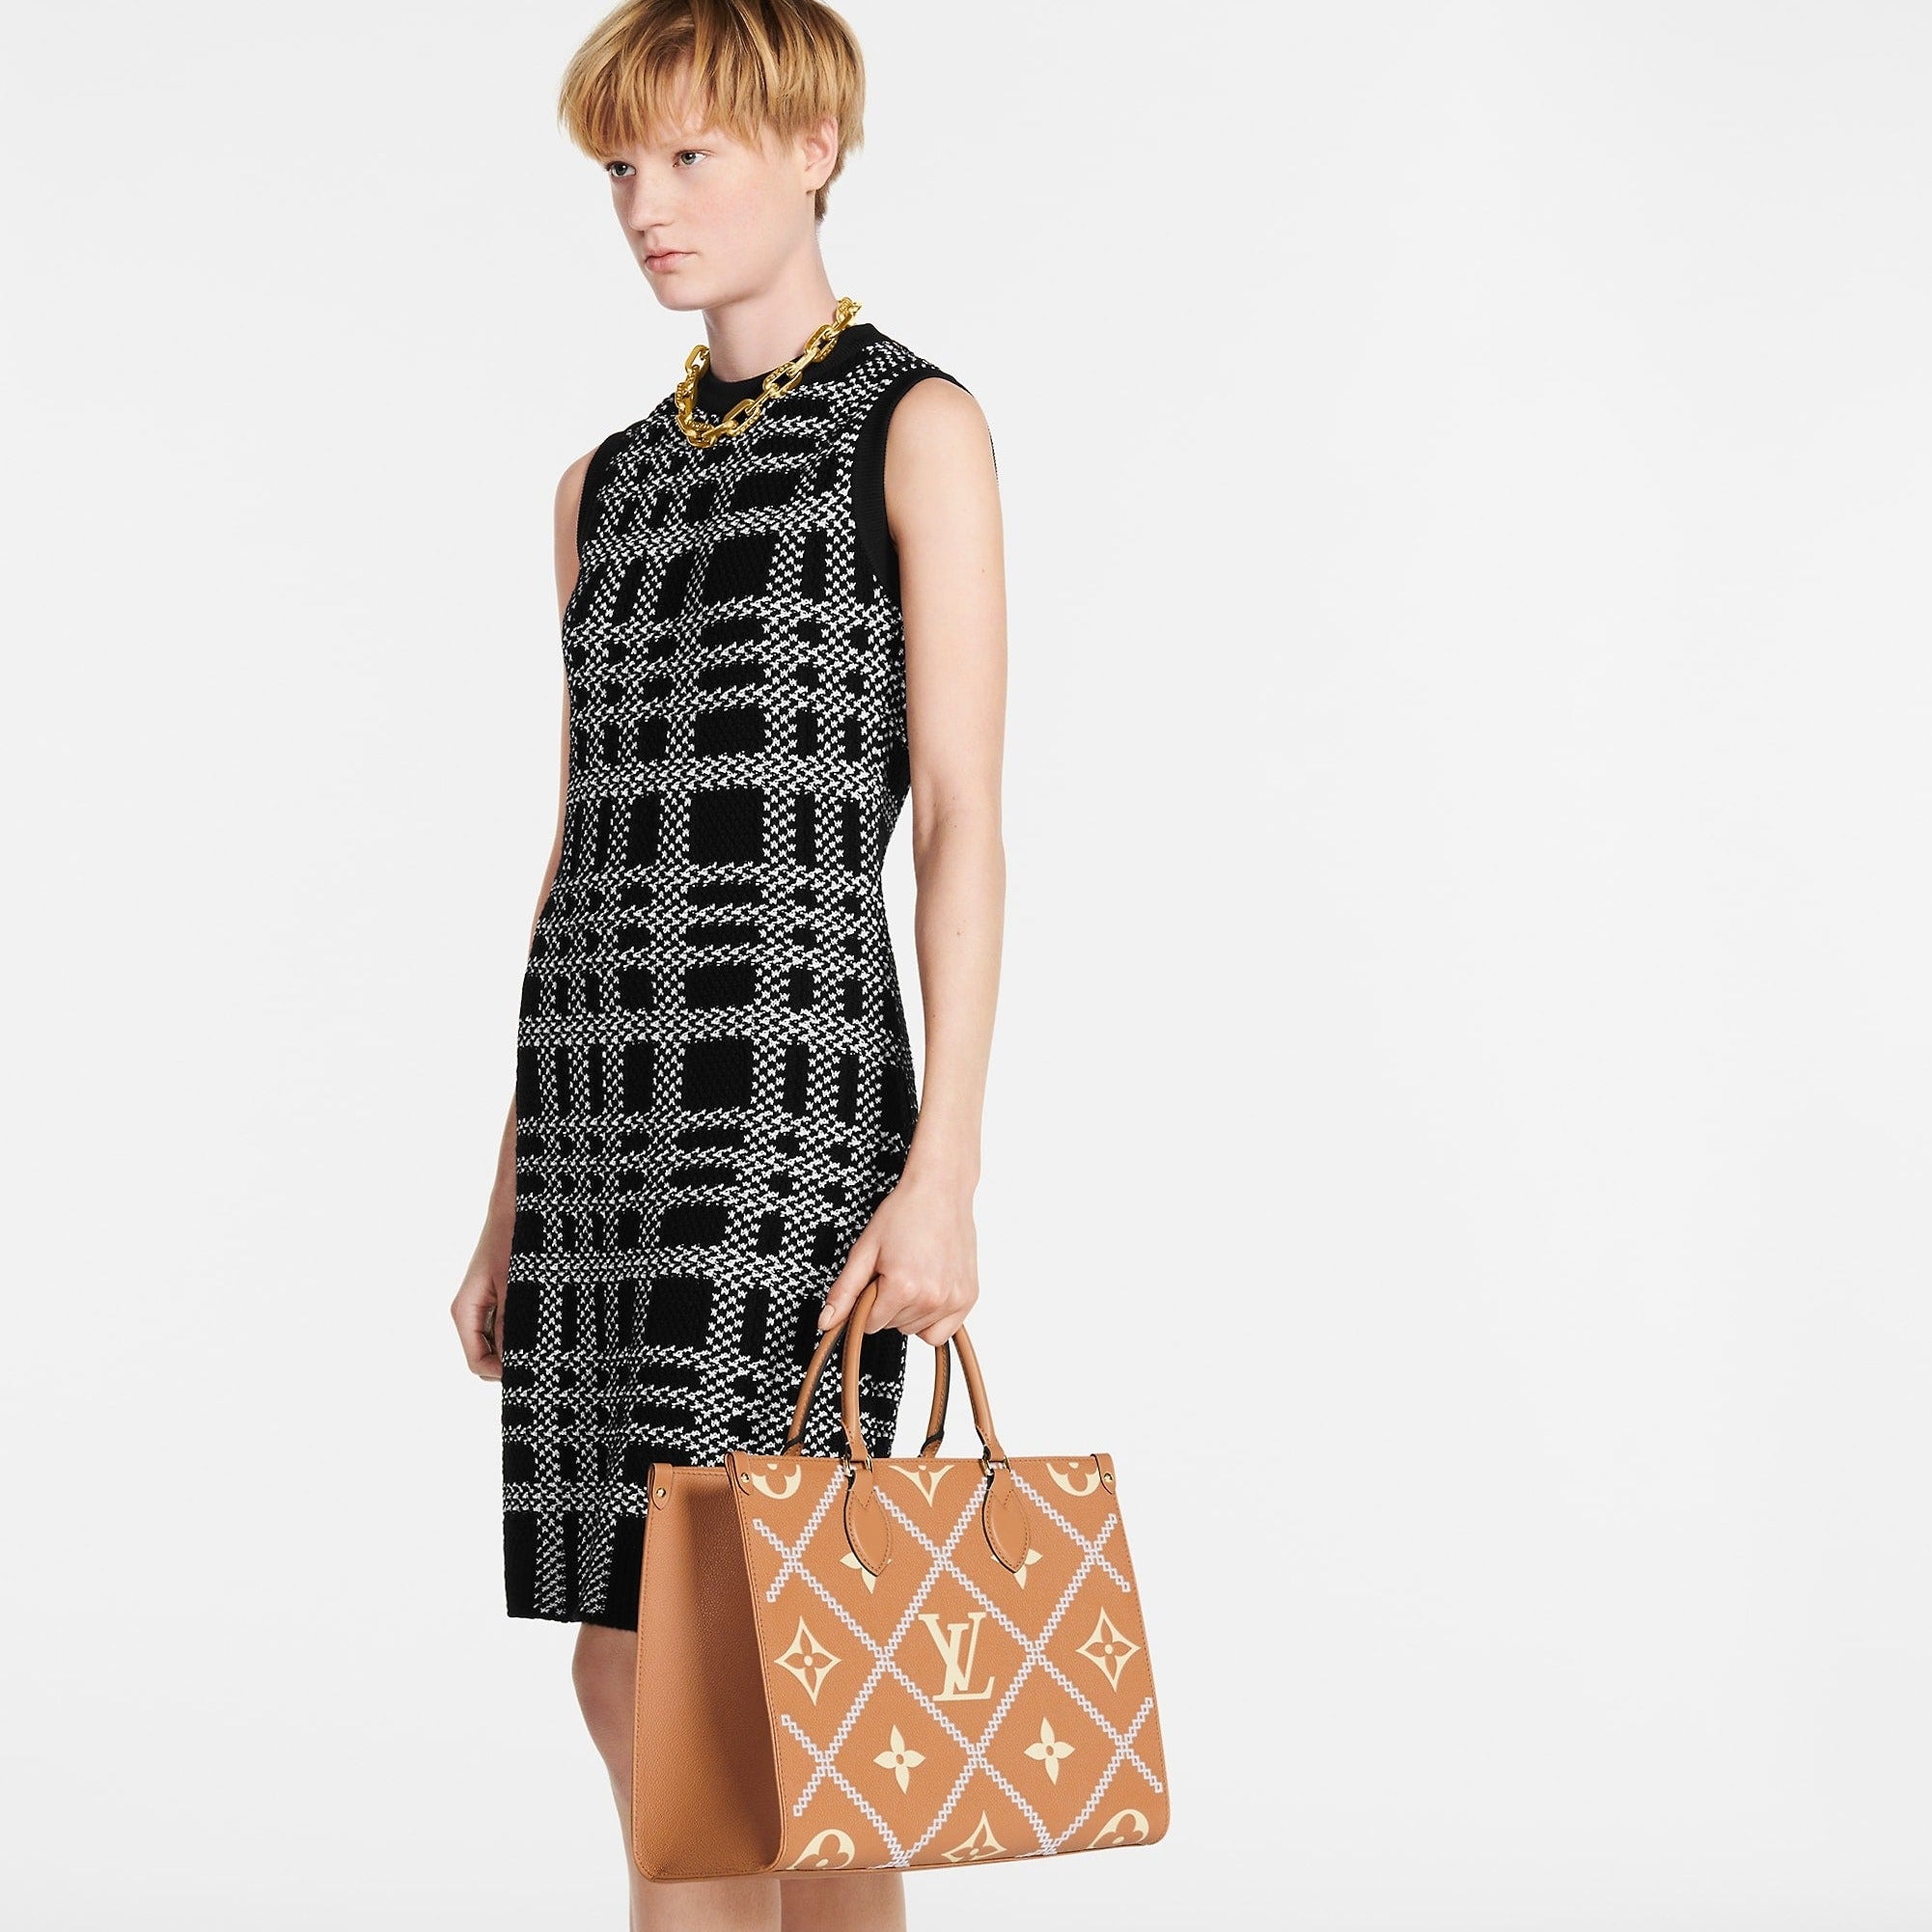 Louis Vuitton Onthego MM Monogram Empreinte Shoulder Bag